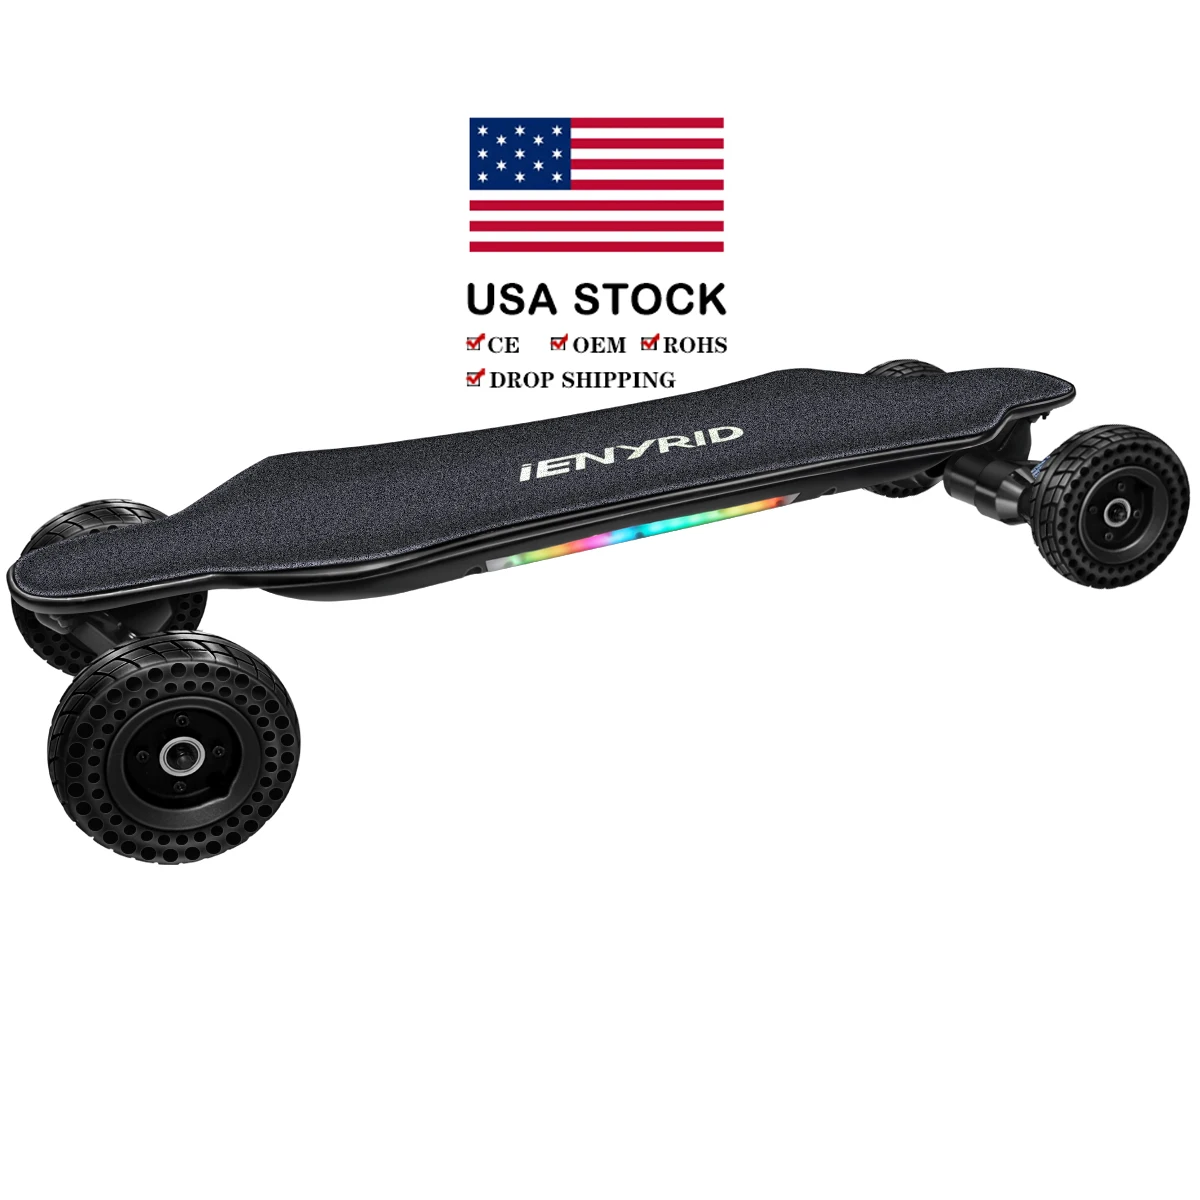 

Popular 4 wheel longboard hub motor boosted electric skateboard 1000W*2 with remote control